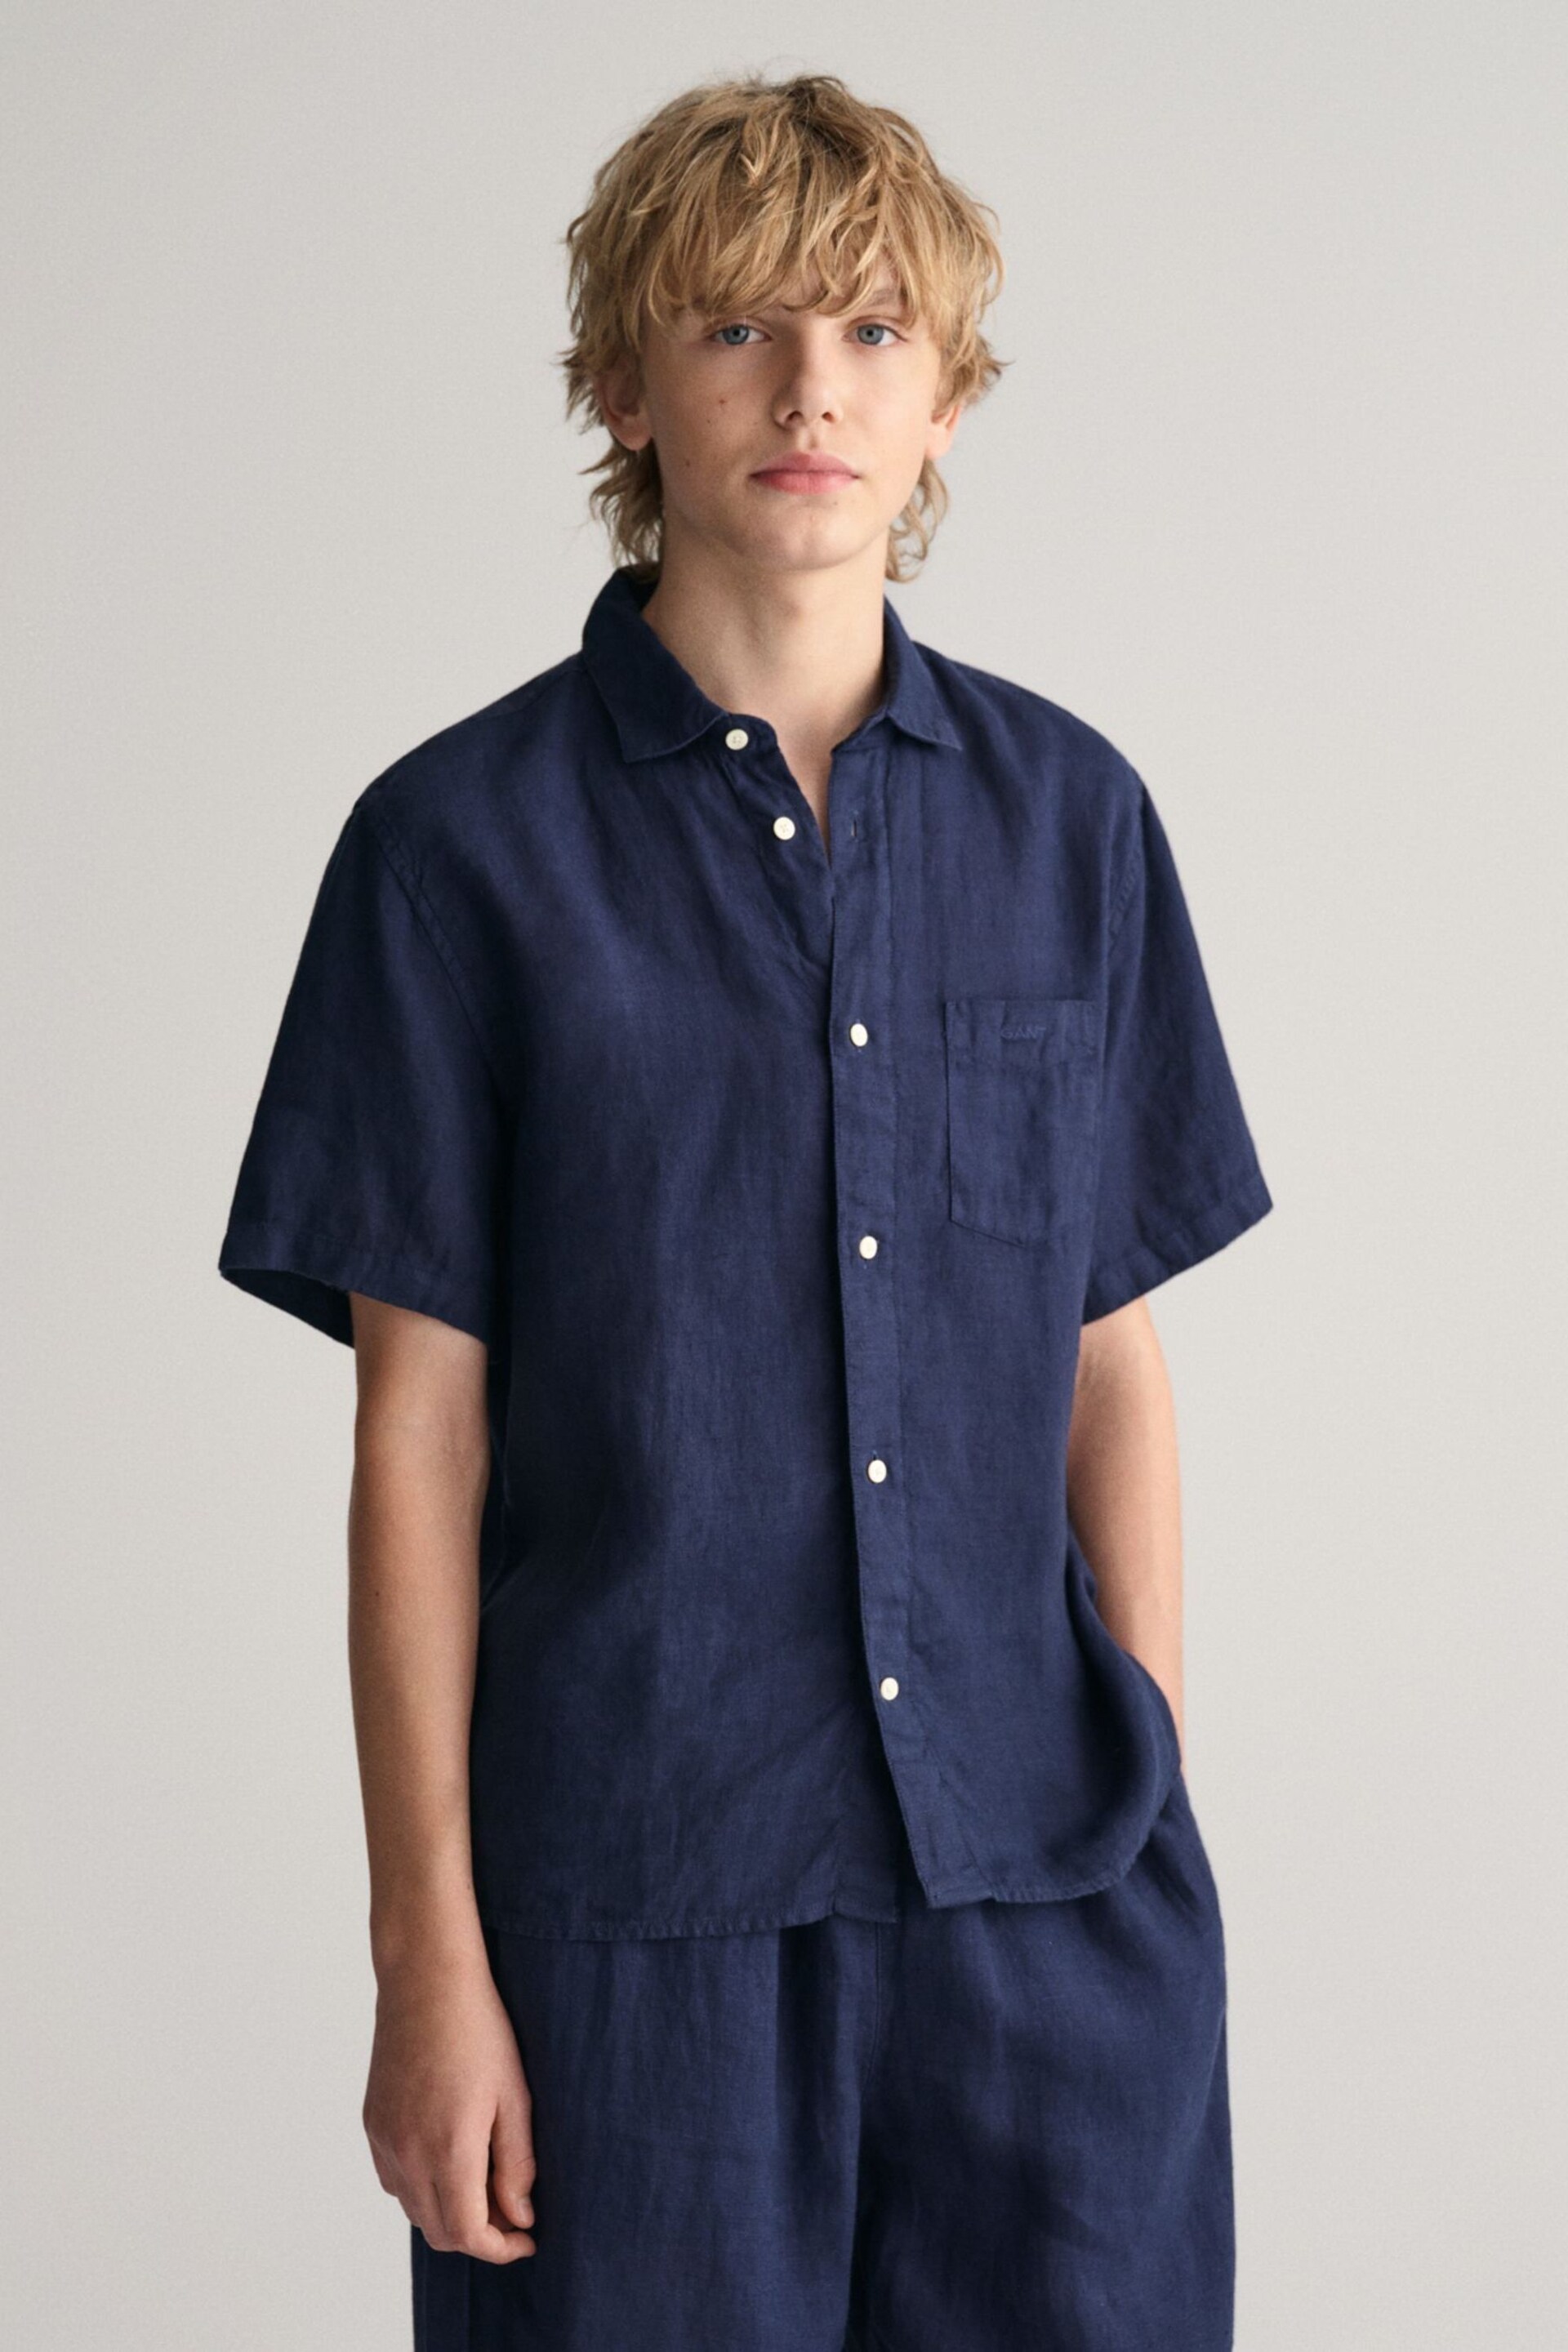 GANT Blue Boys Linen Short Sleeve Shirt - Image 1 of 6